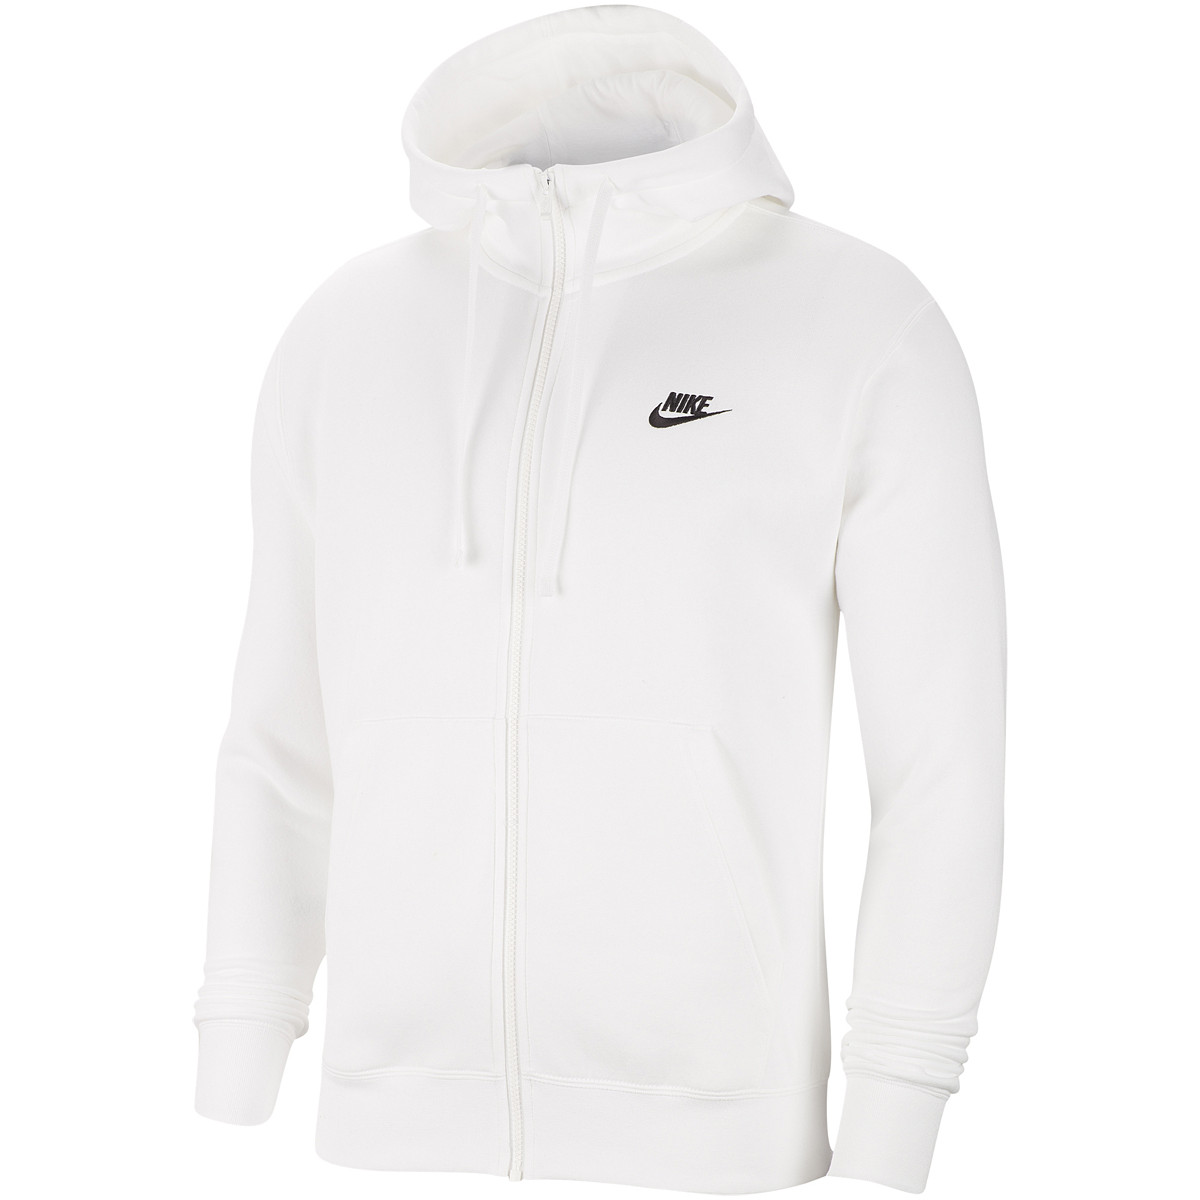 Sweat à capuche Nike Sportswear Club Fleece Blanc - Veste/sweat - Tennis  Achat